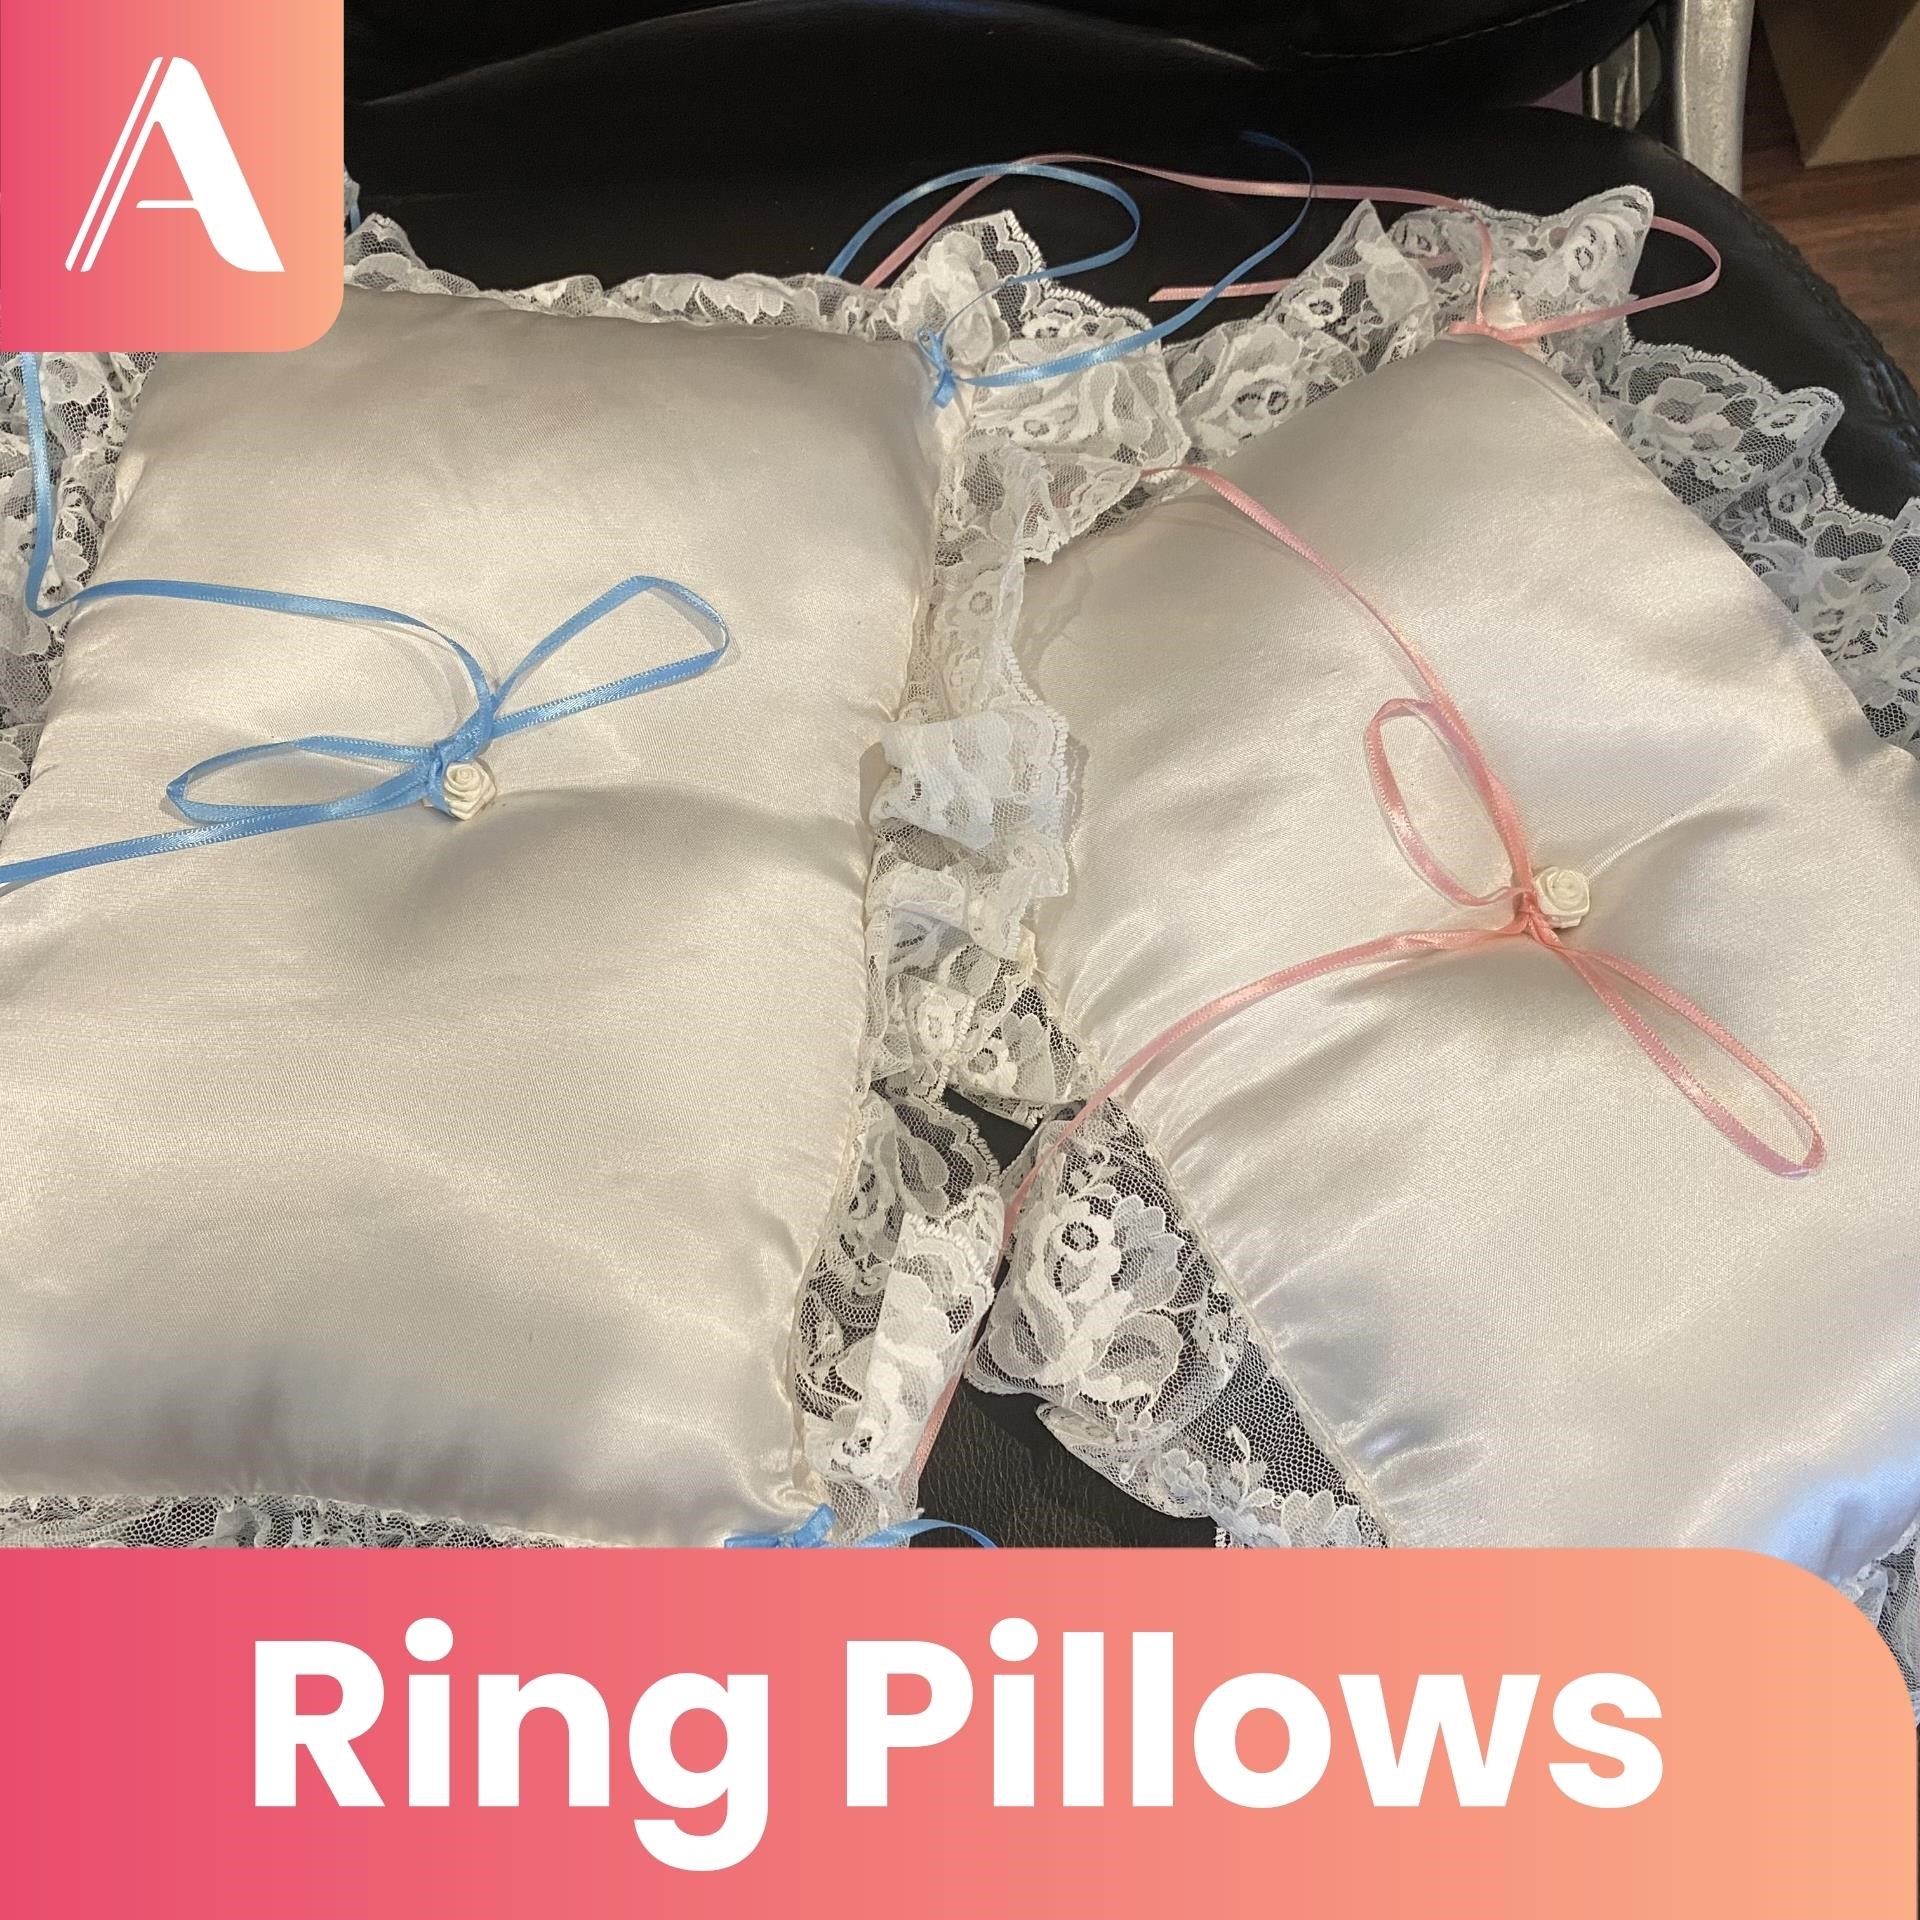 2 Wedding Ring Pillows